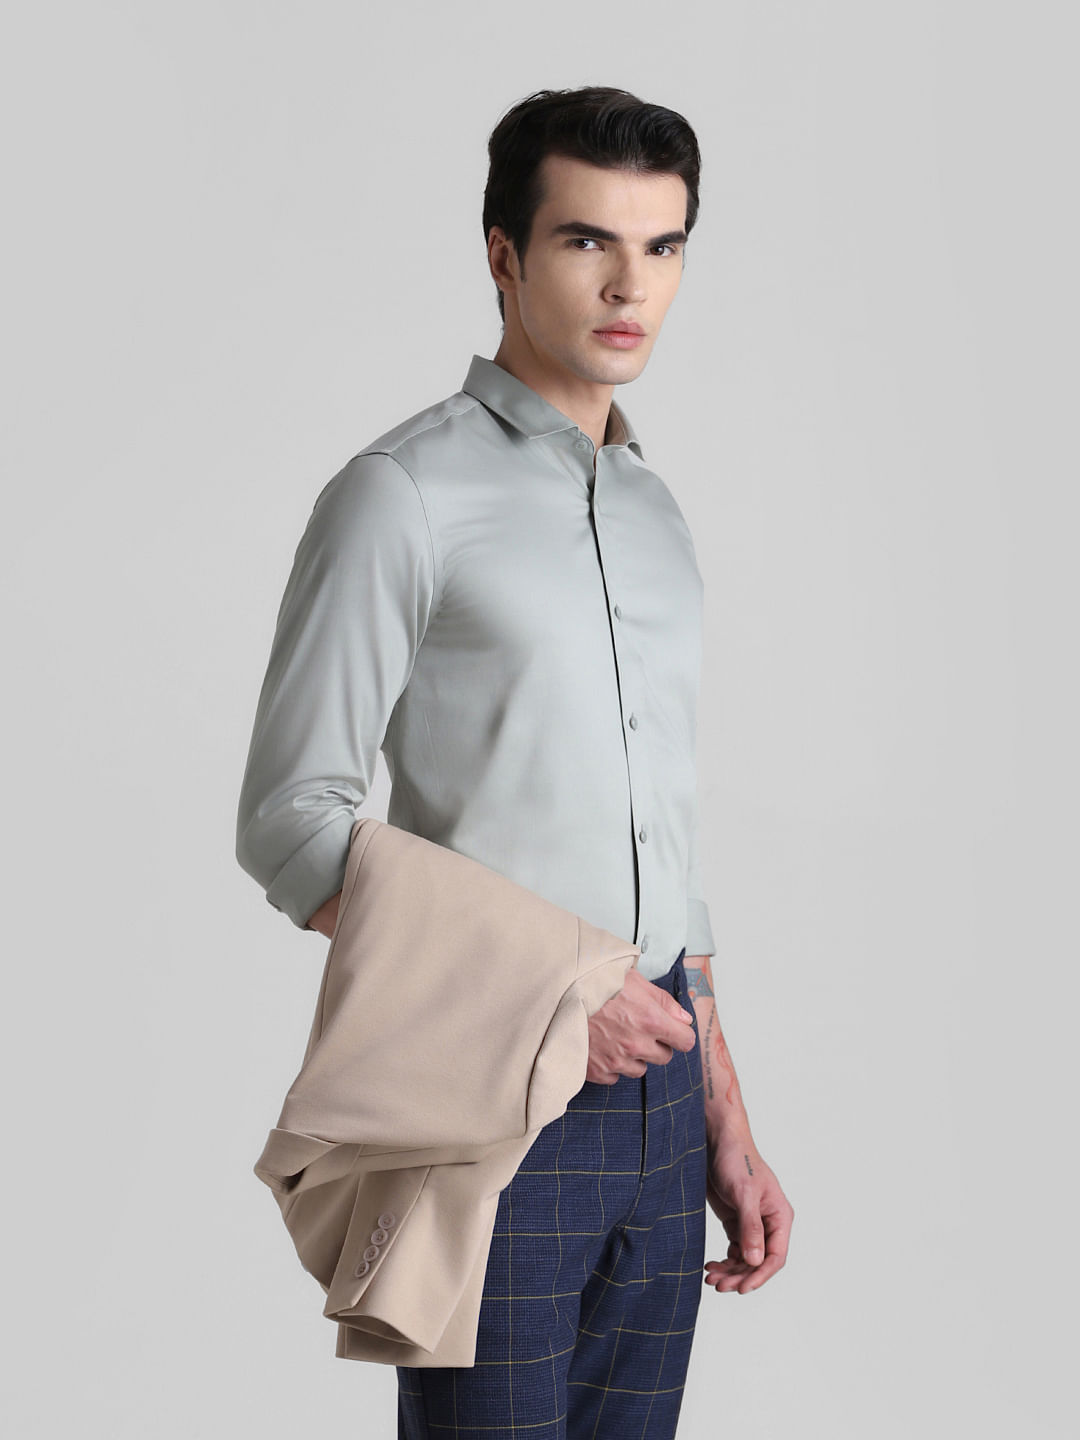 Stylish Man Gray Tshirt White Pants Stock Photo 743187322 | Shutterstock